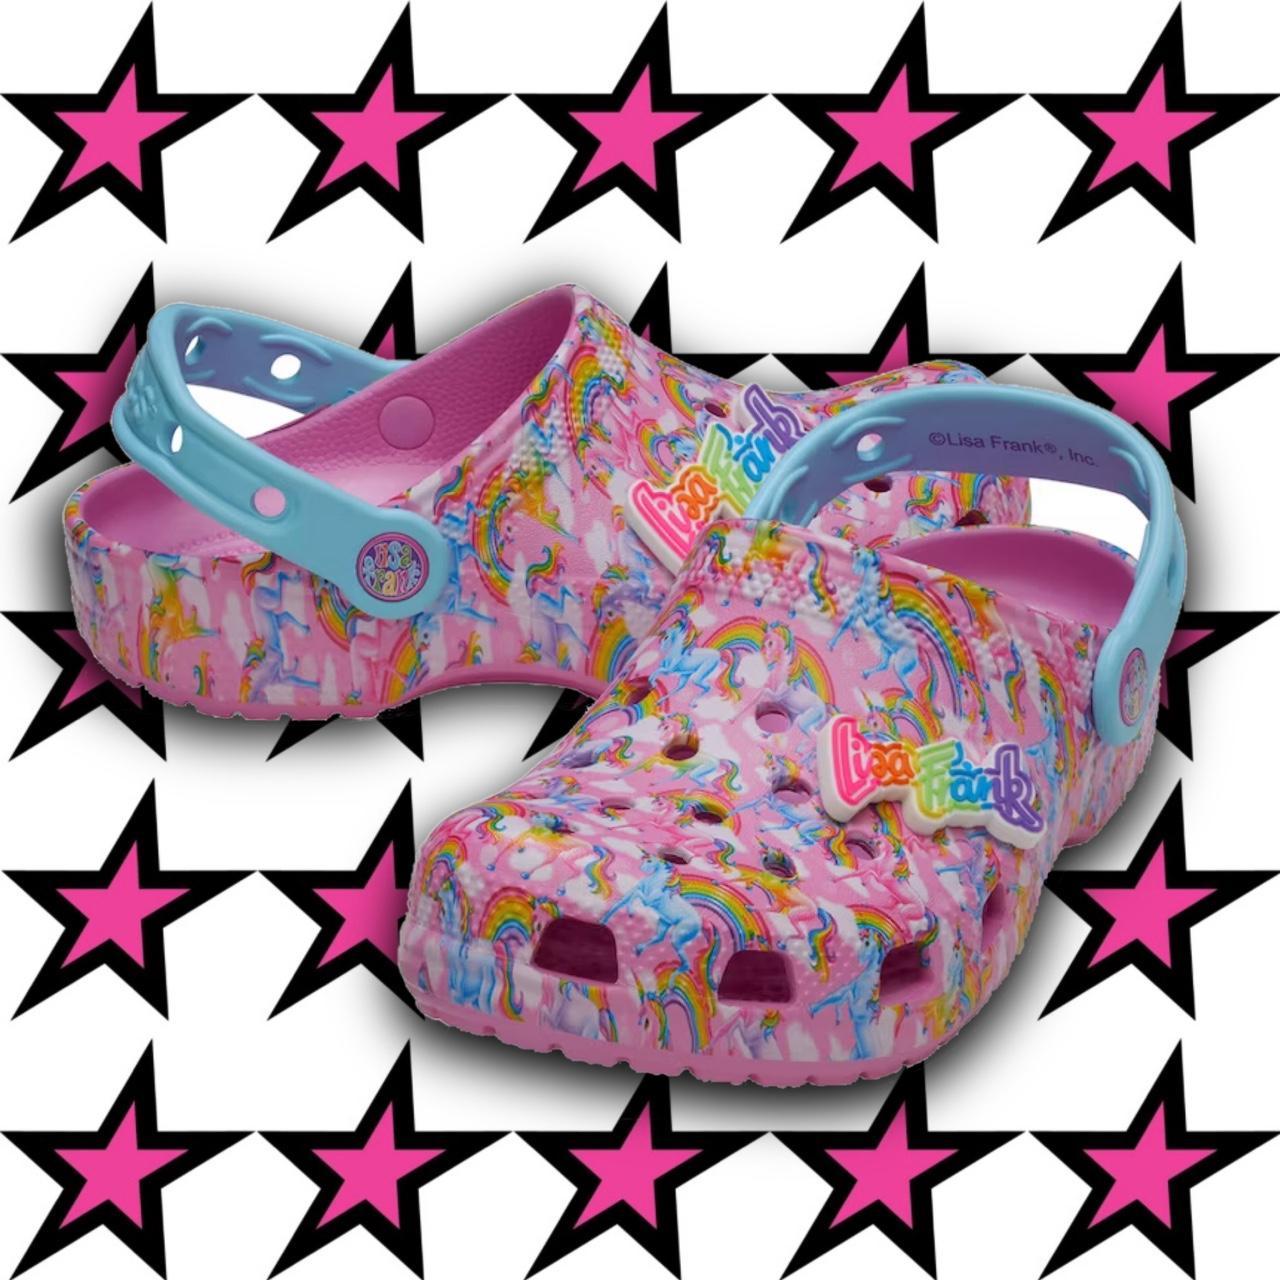 Lisa Frank X Crocs Classic Clog Shoes Neon - Depop